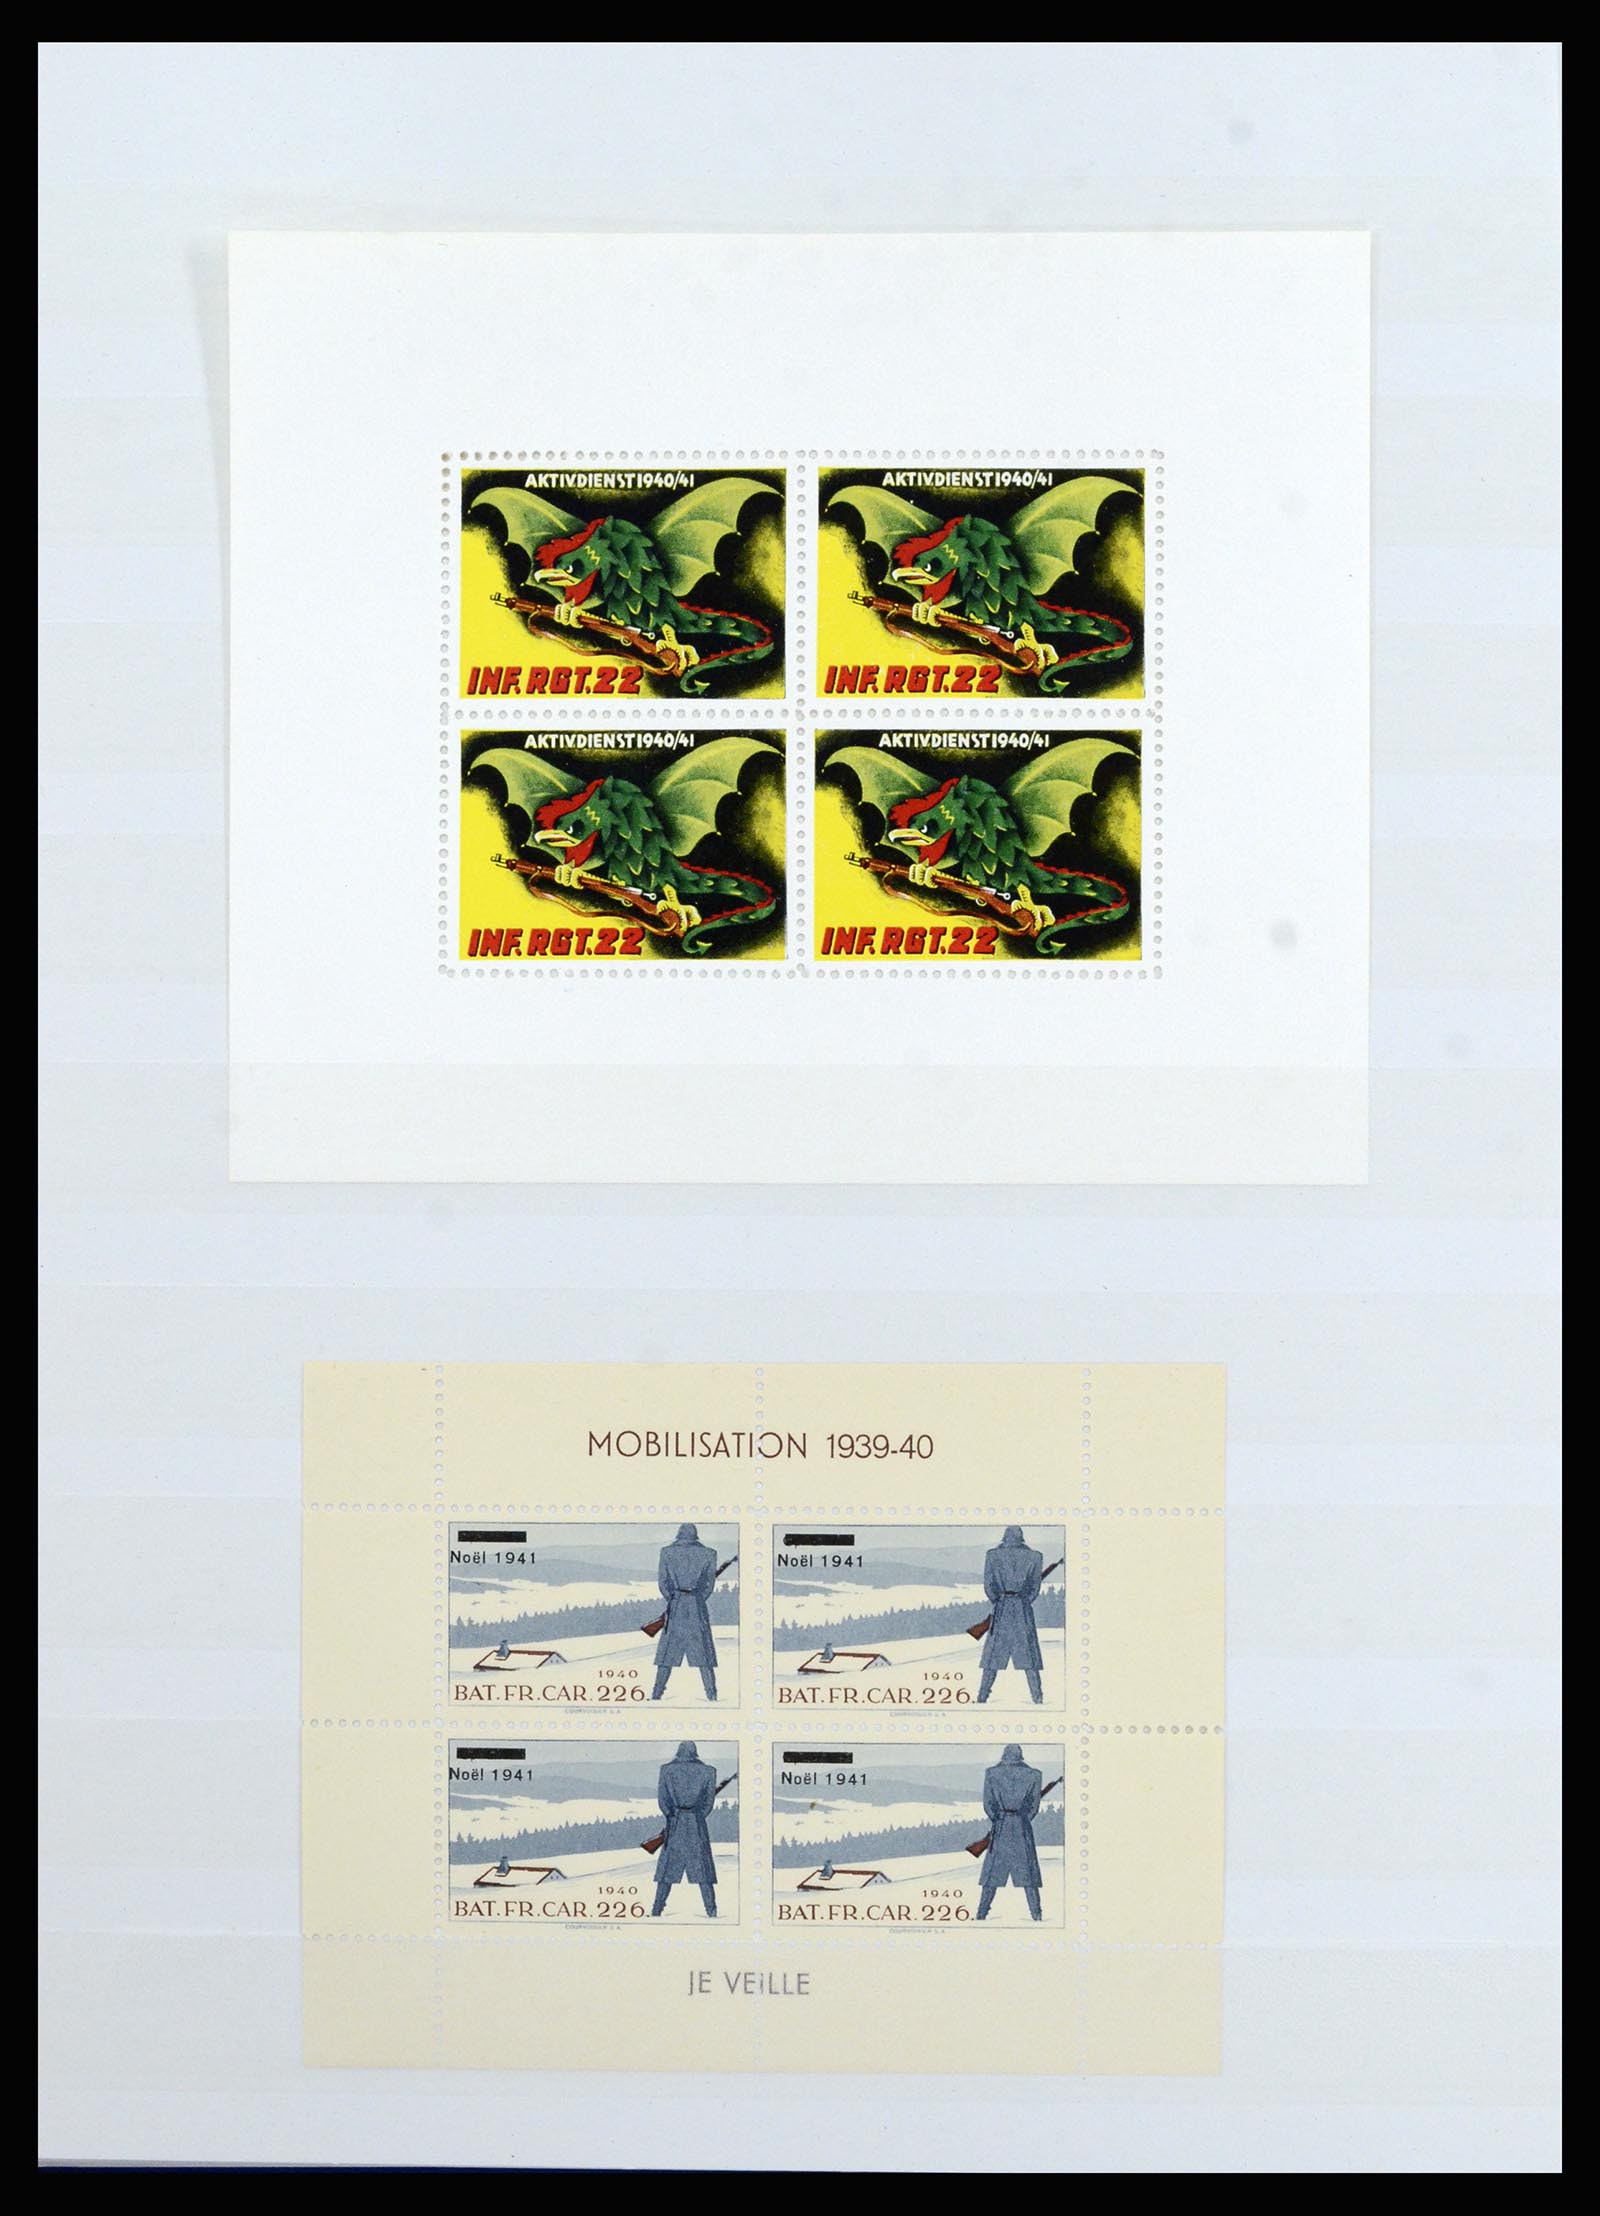 37149 020 - Stamp collection 37149 Switzerland soldier stamps 1914-1945.